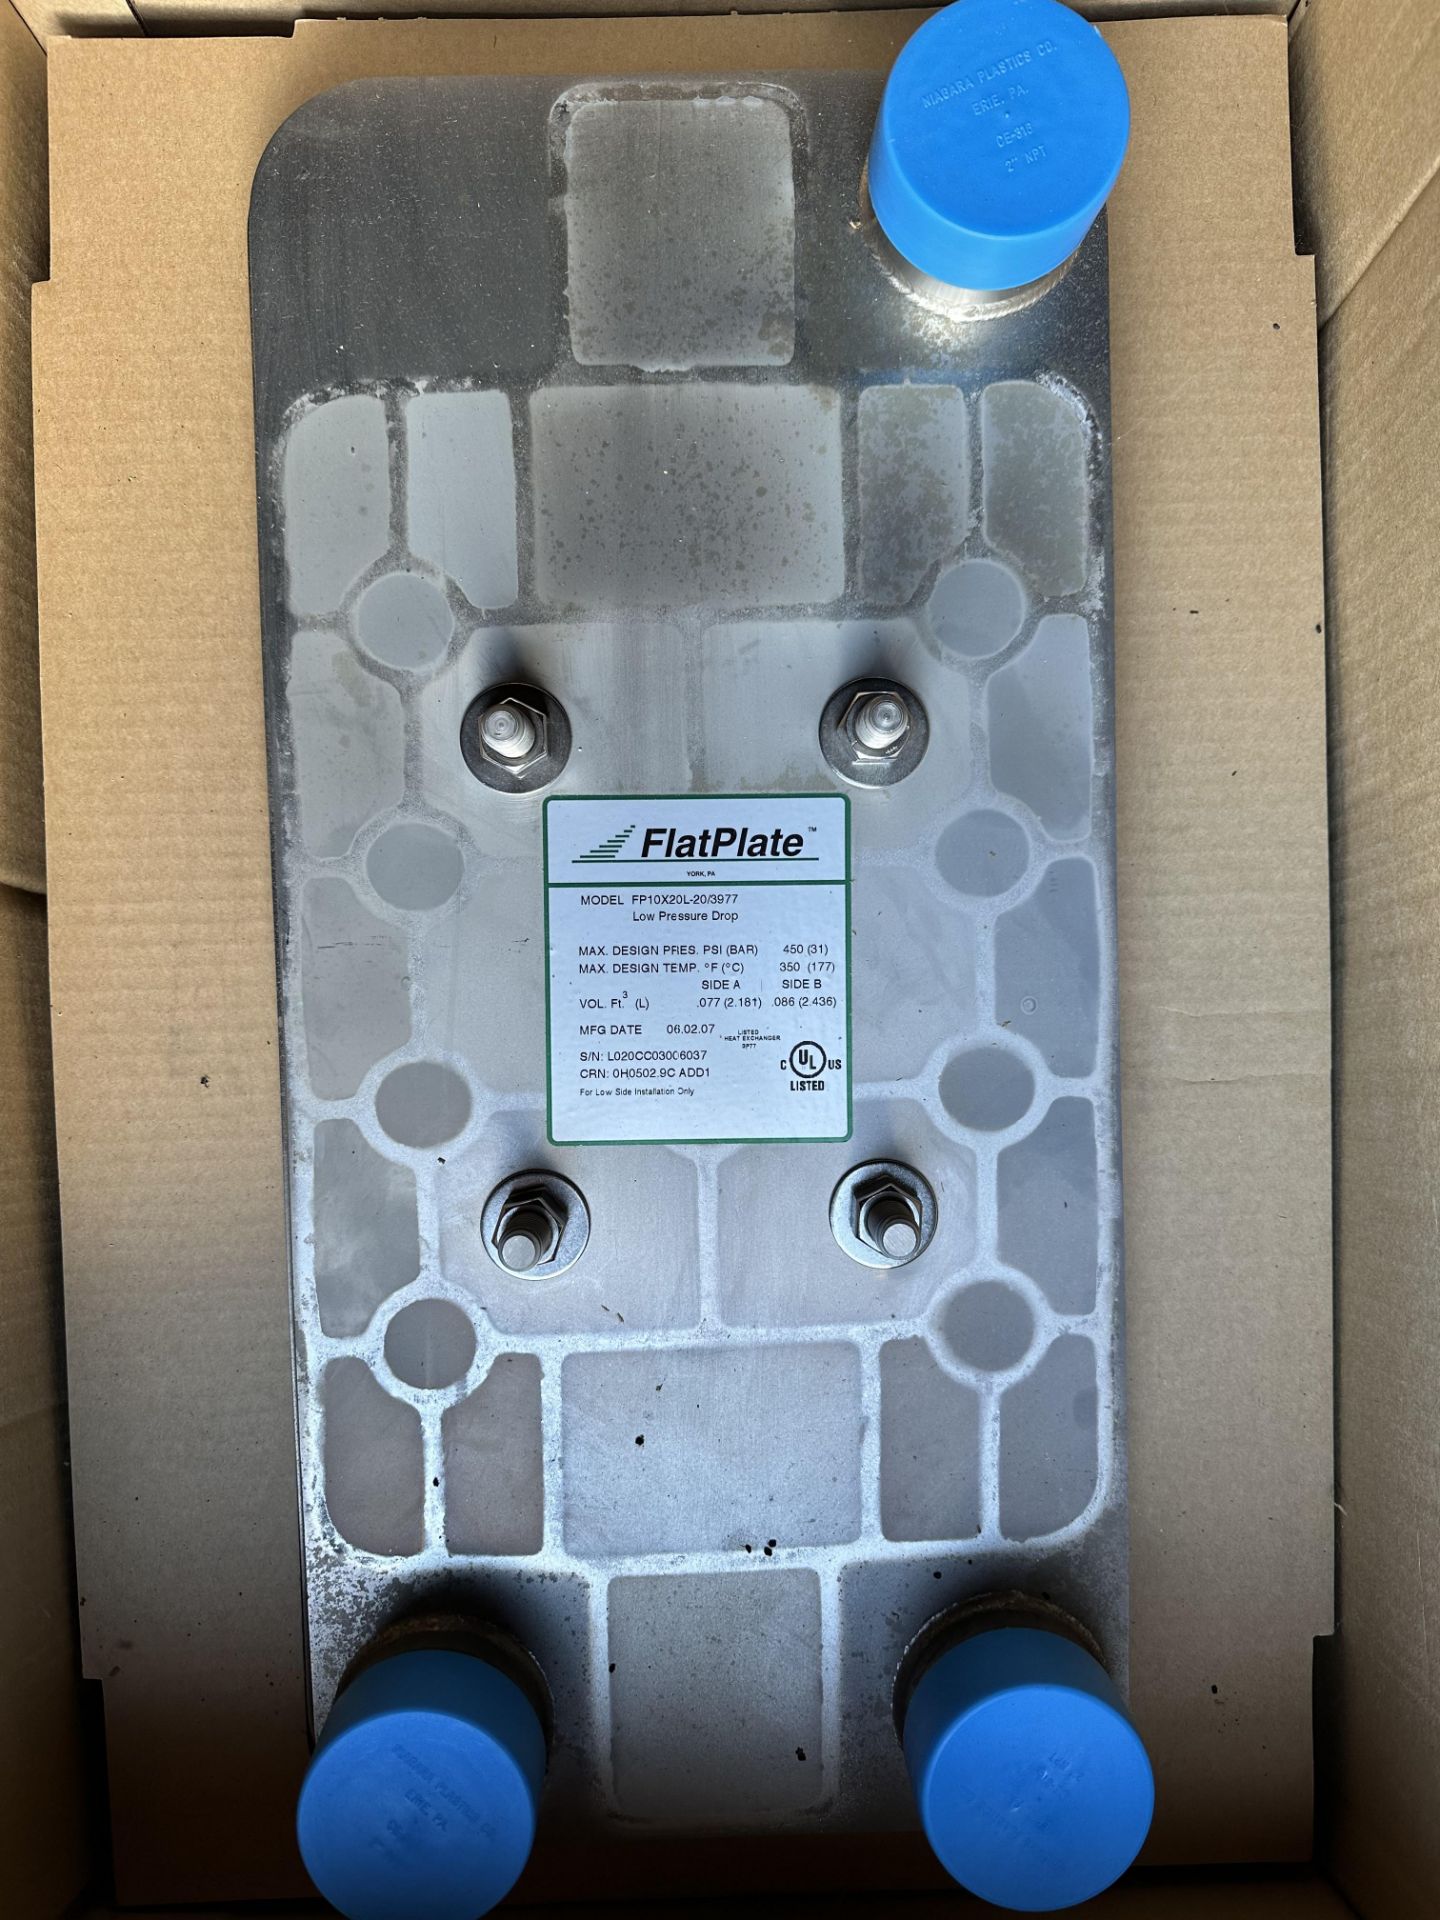 Lot of (5) New/Still-In-Box FlatPlate Heat Exchanger Plates. All Model FP10x20L-20/3977